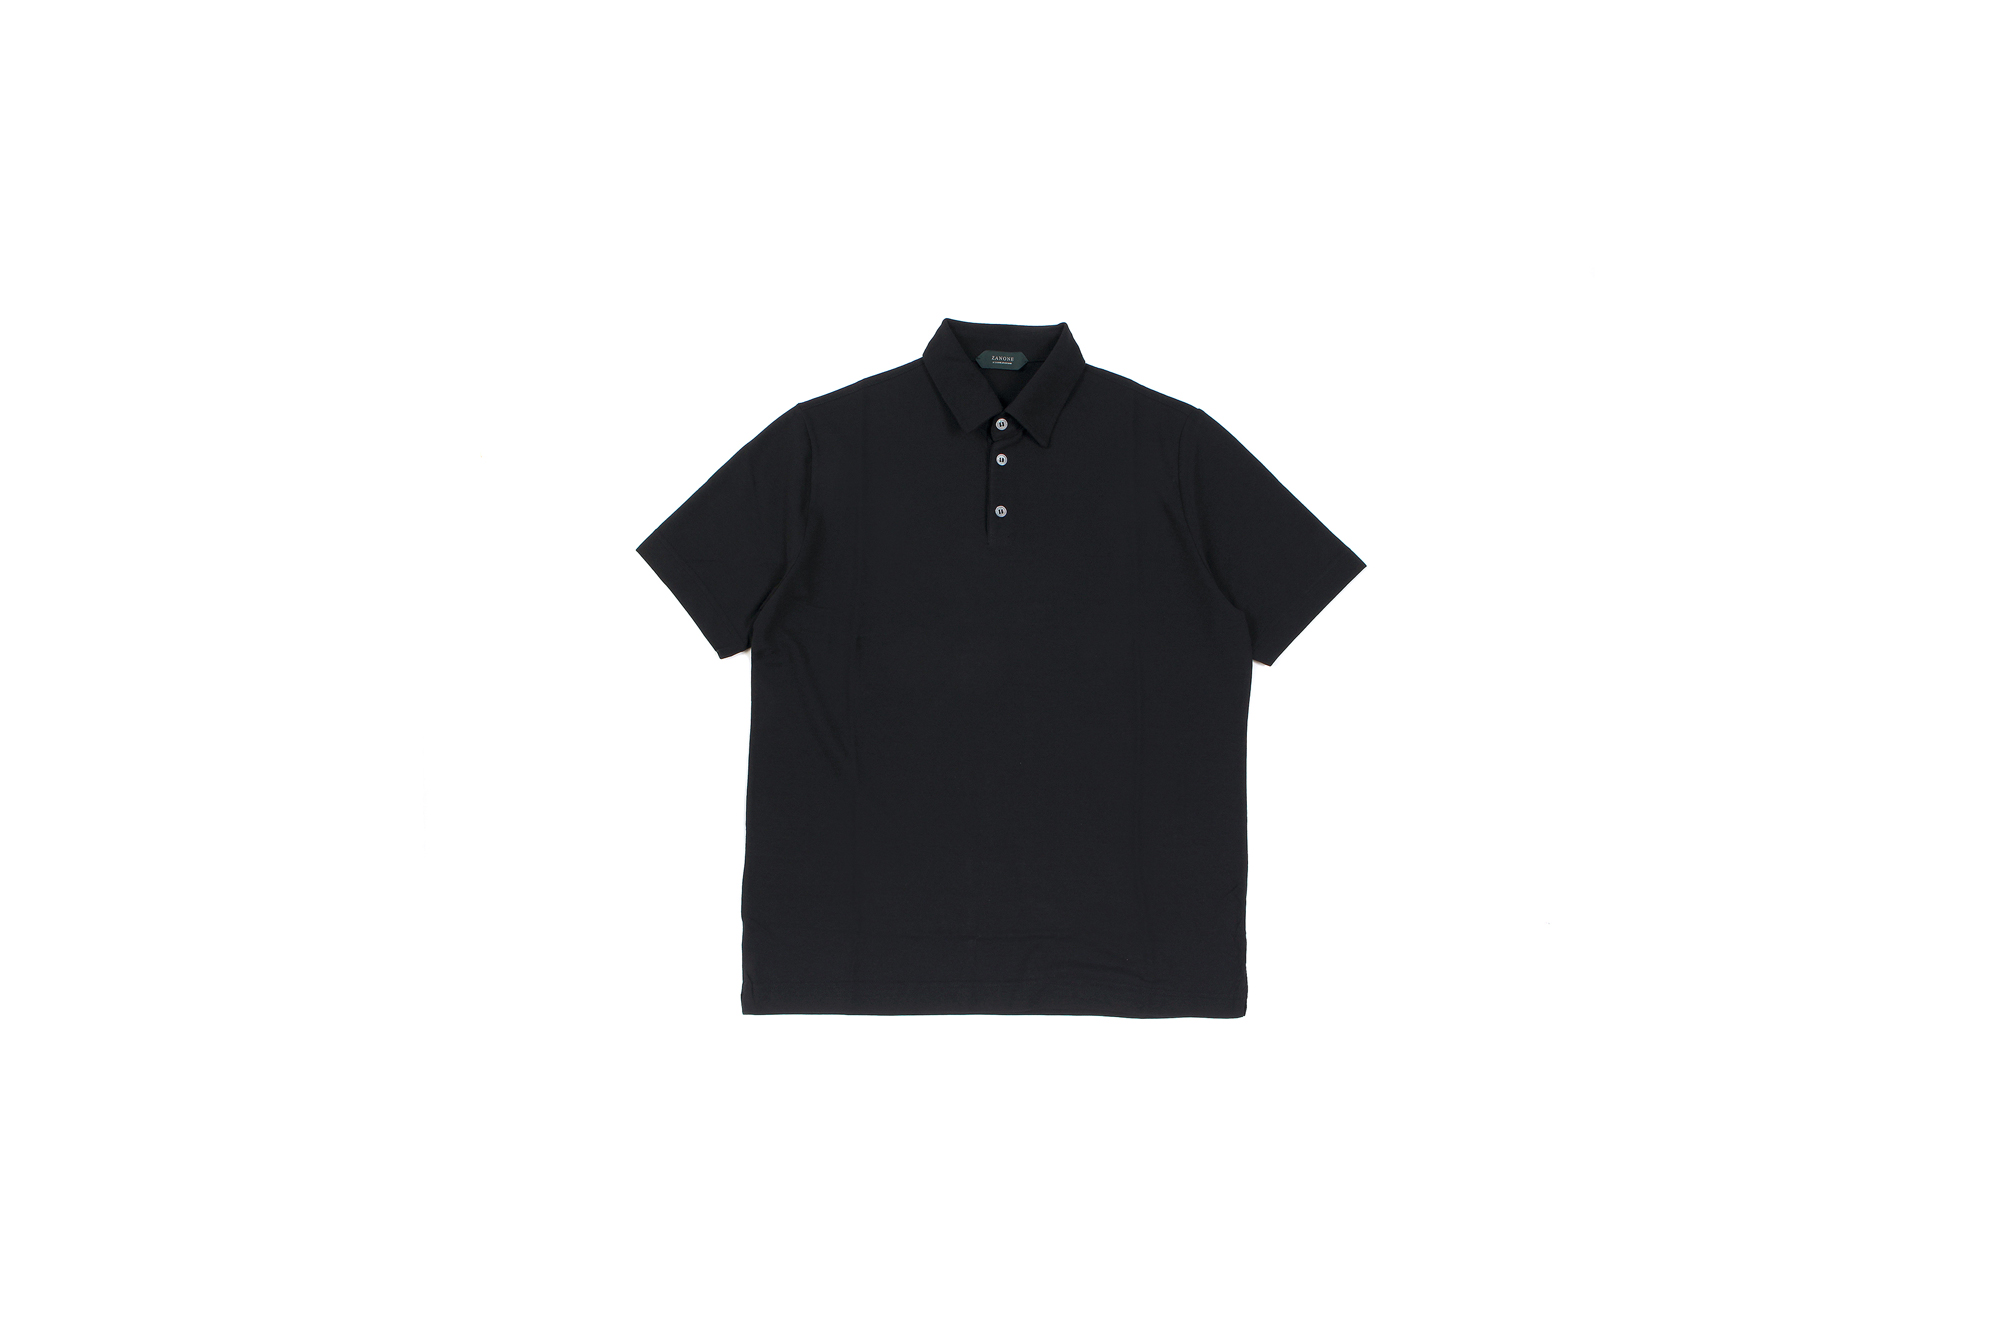 ZANONE(ザノーネ) Polo Shirt ice cotton アイスコットン ポロシャツ BLACK (ブラック・Z0015) made in italy (イタリア製) 2020春夏新作 愛知 名古屋 altoediritto アルトエデリット